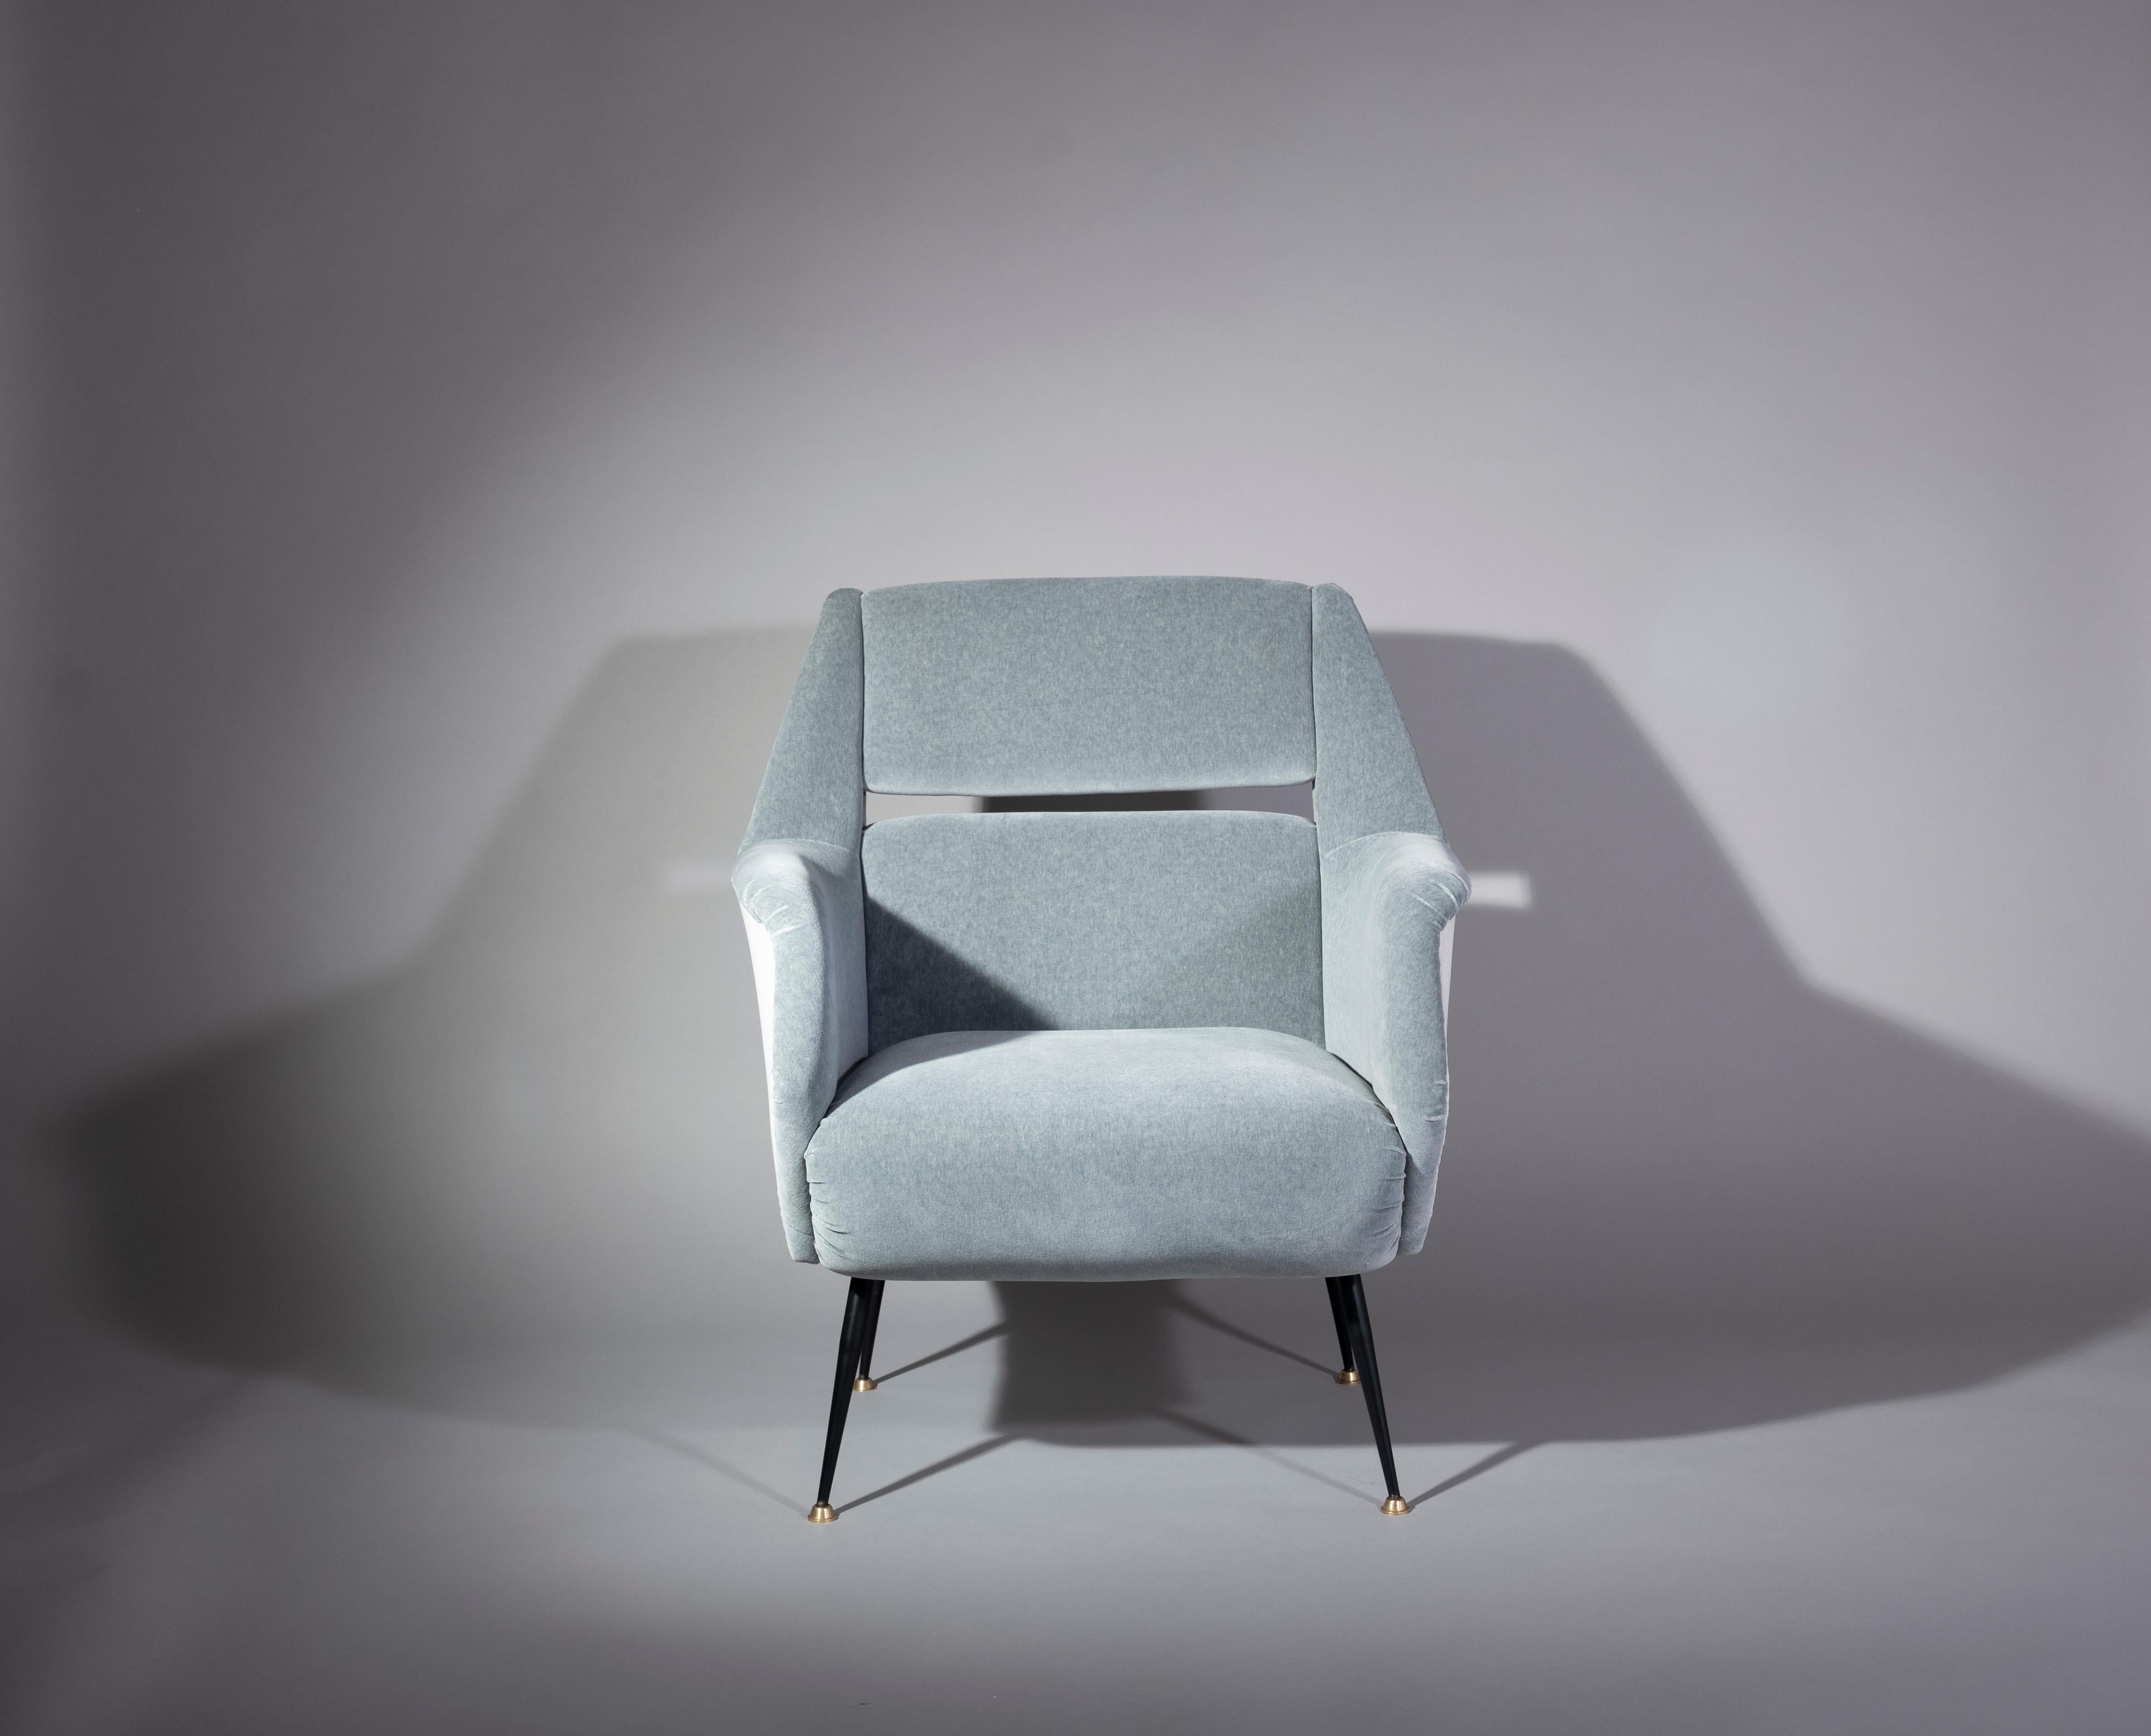 Amazing lounge chairs designed by Gigi Radice for Minotti, Italy, 1950s
Legs in black lacquered steel, brass feet, reupholstered in Dedar, Dante velvet (color lago and perla).